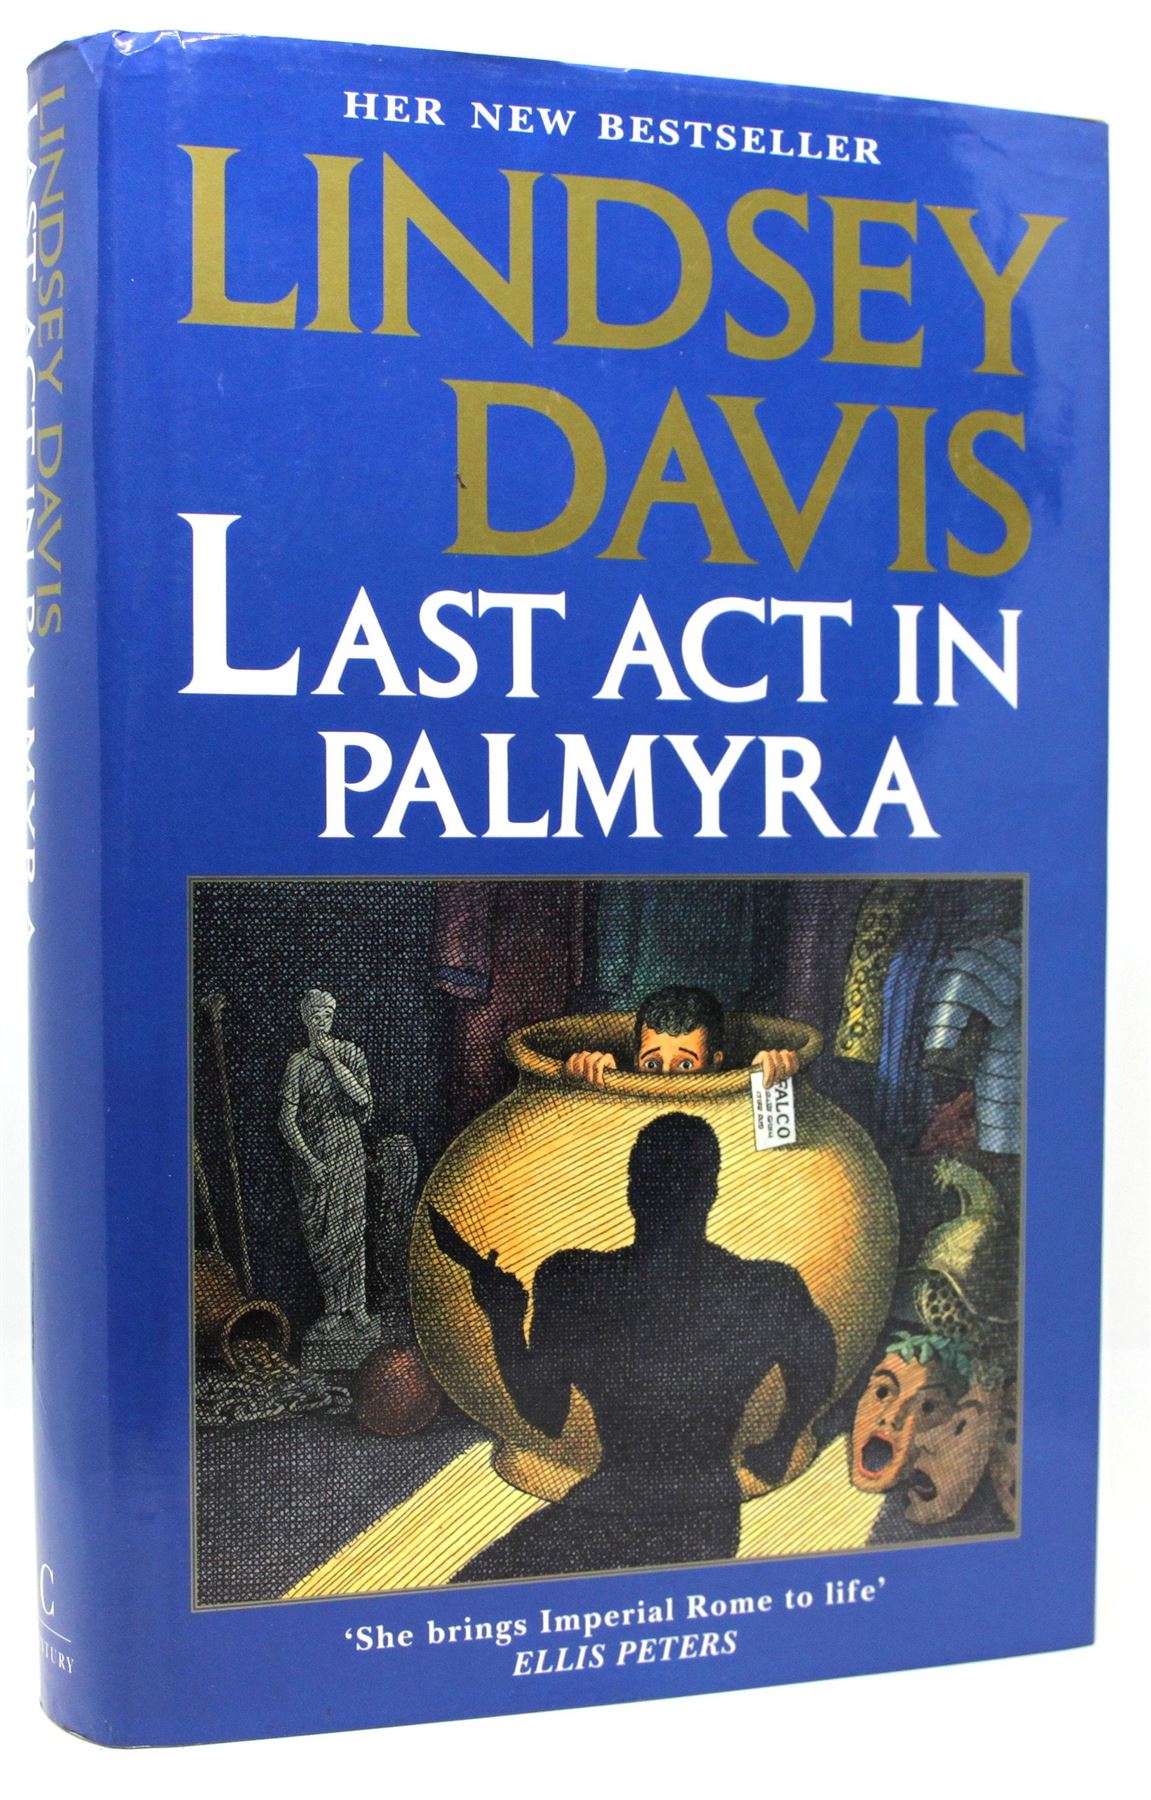 Last Act in Palmyra